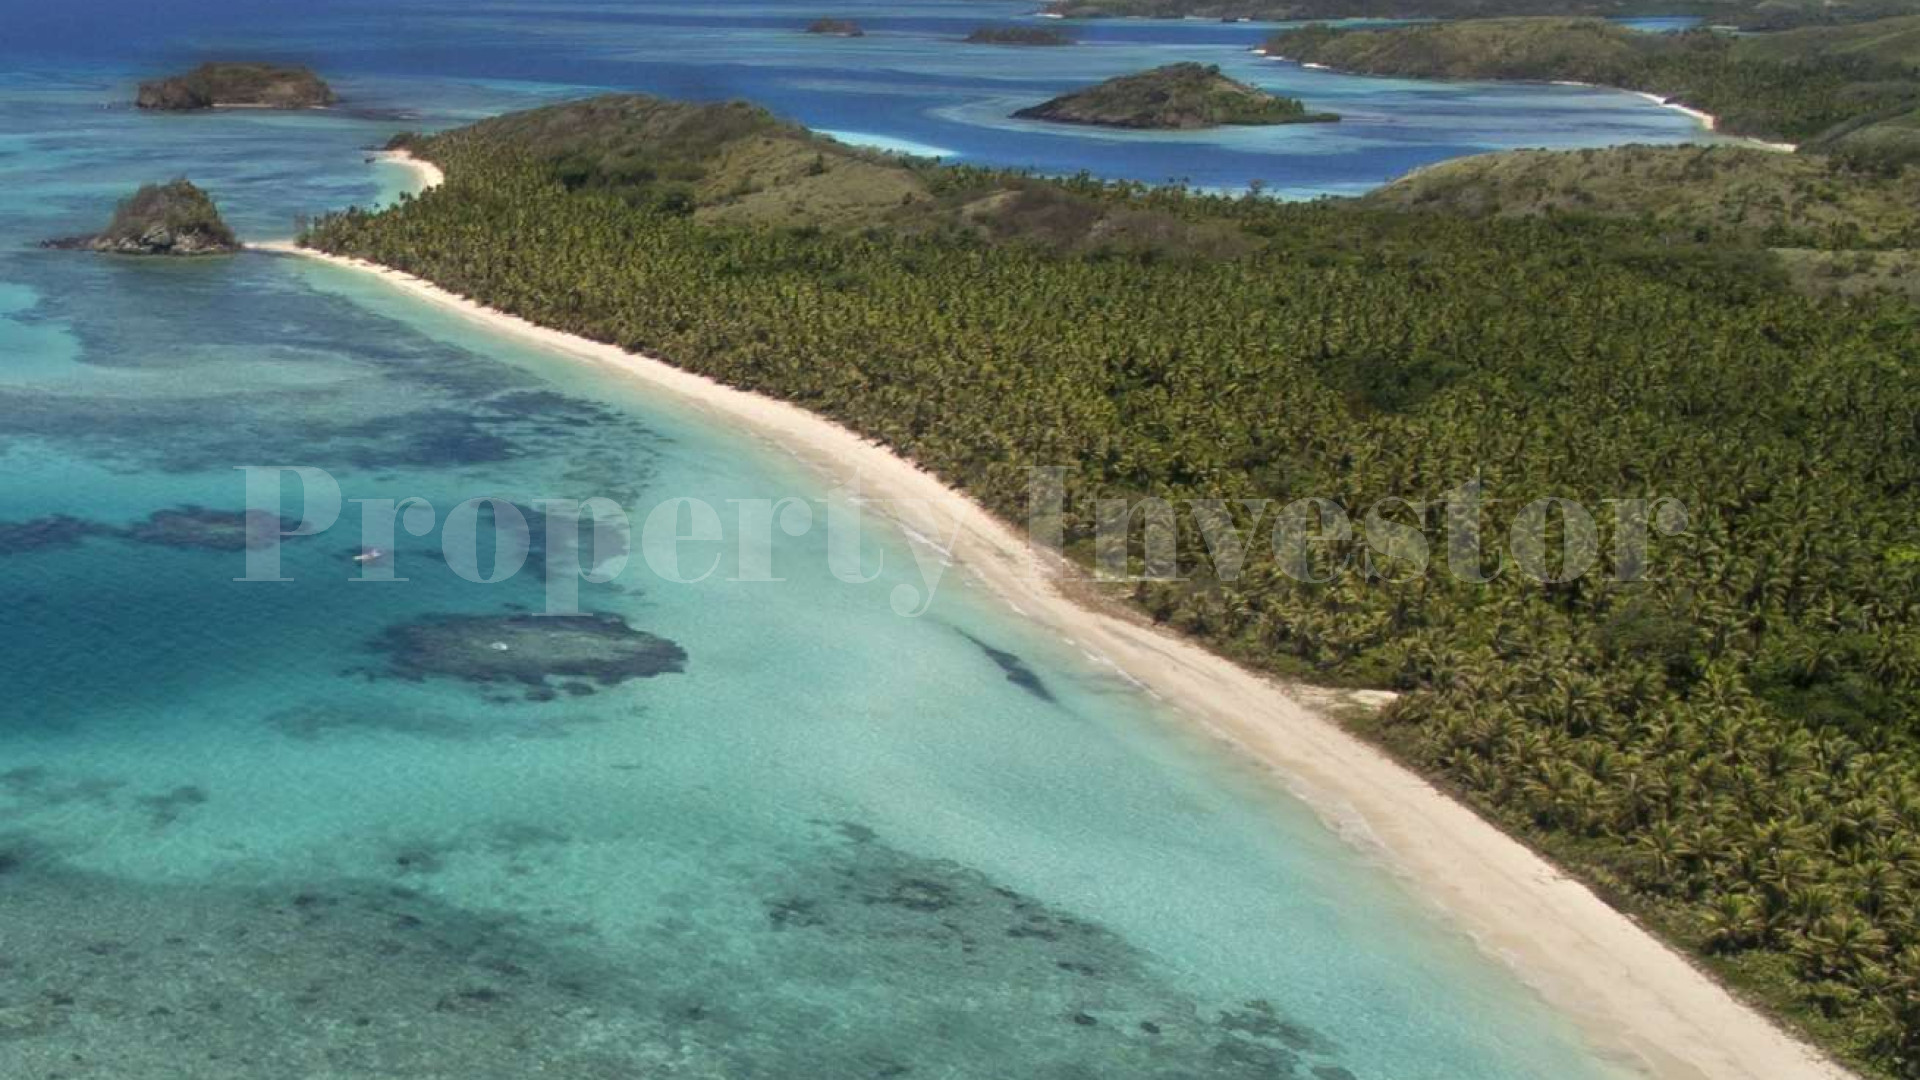 Private Island Development Opportunity in Fiji